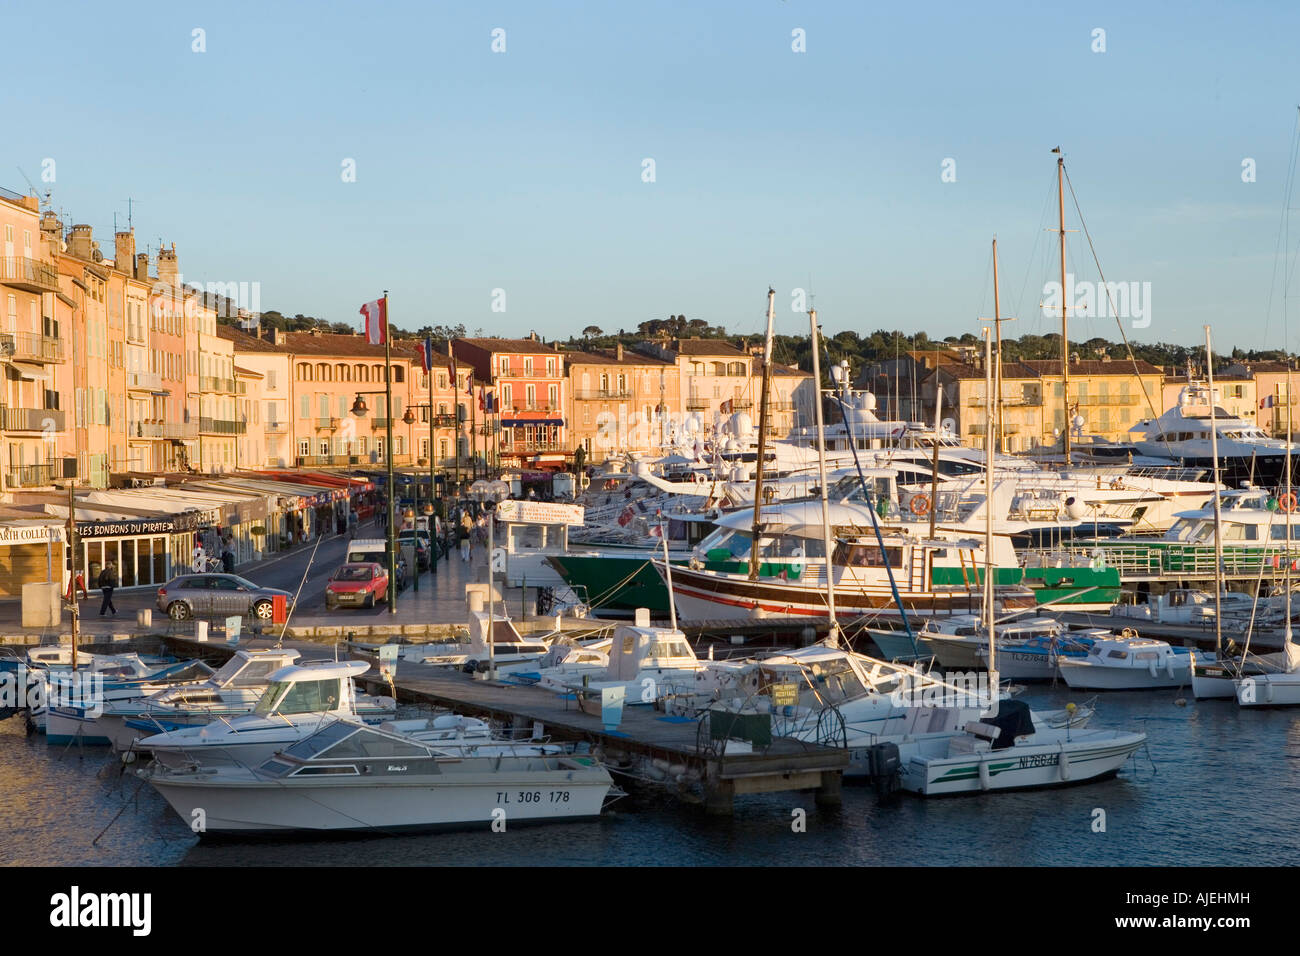 Saint Tropez, Port basin and promenade Stock Photo